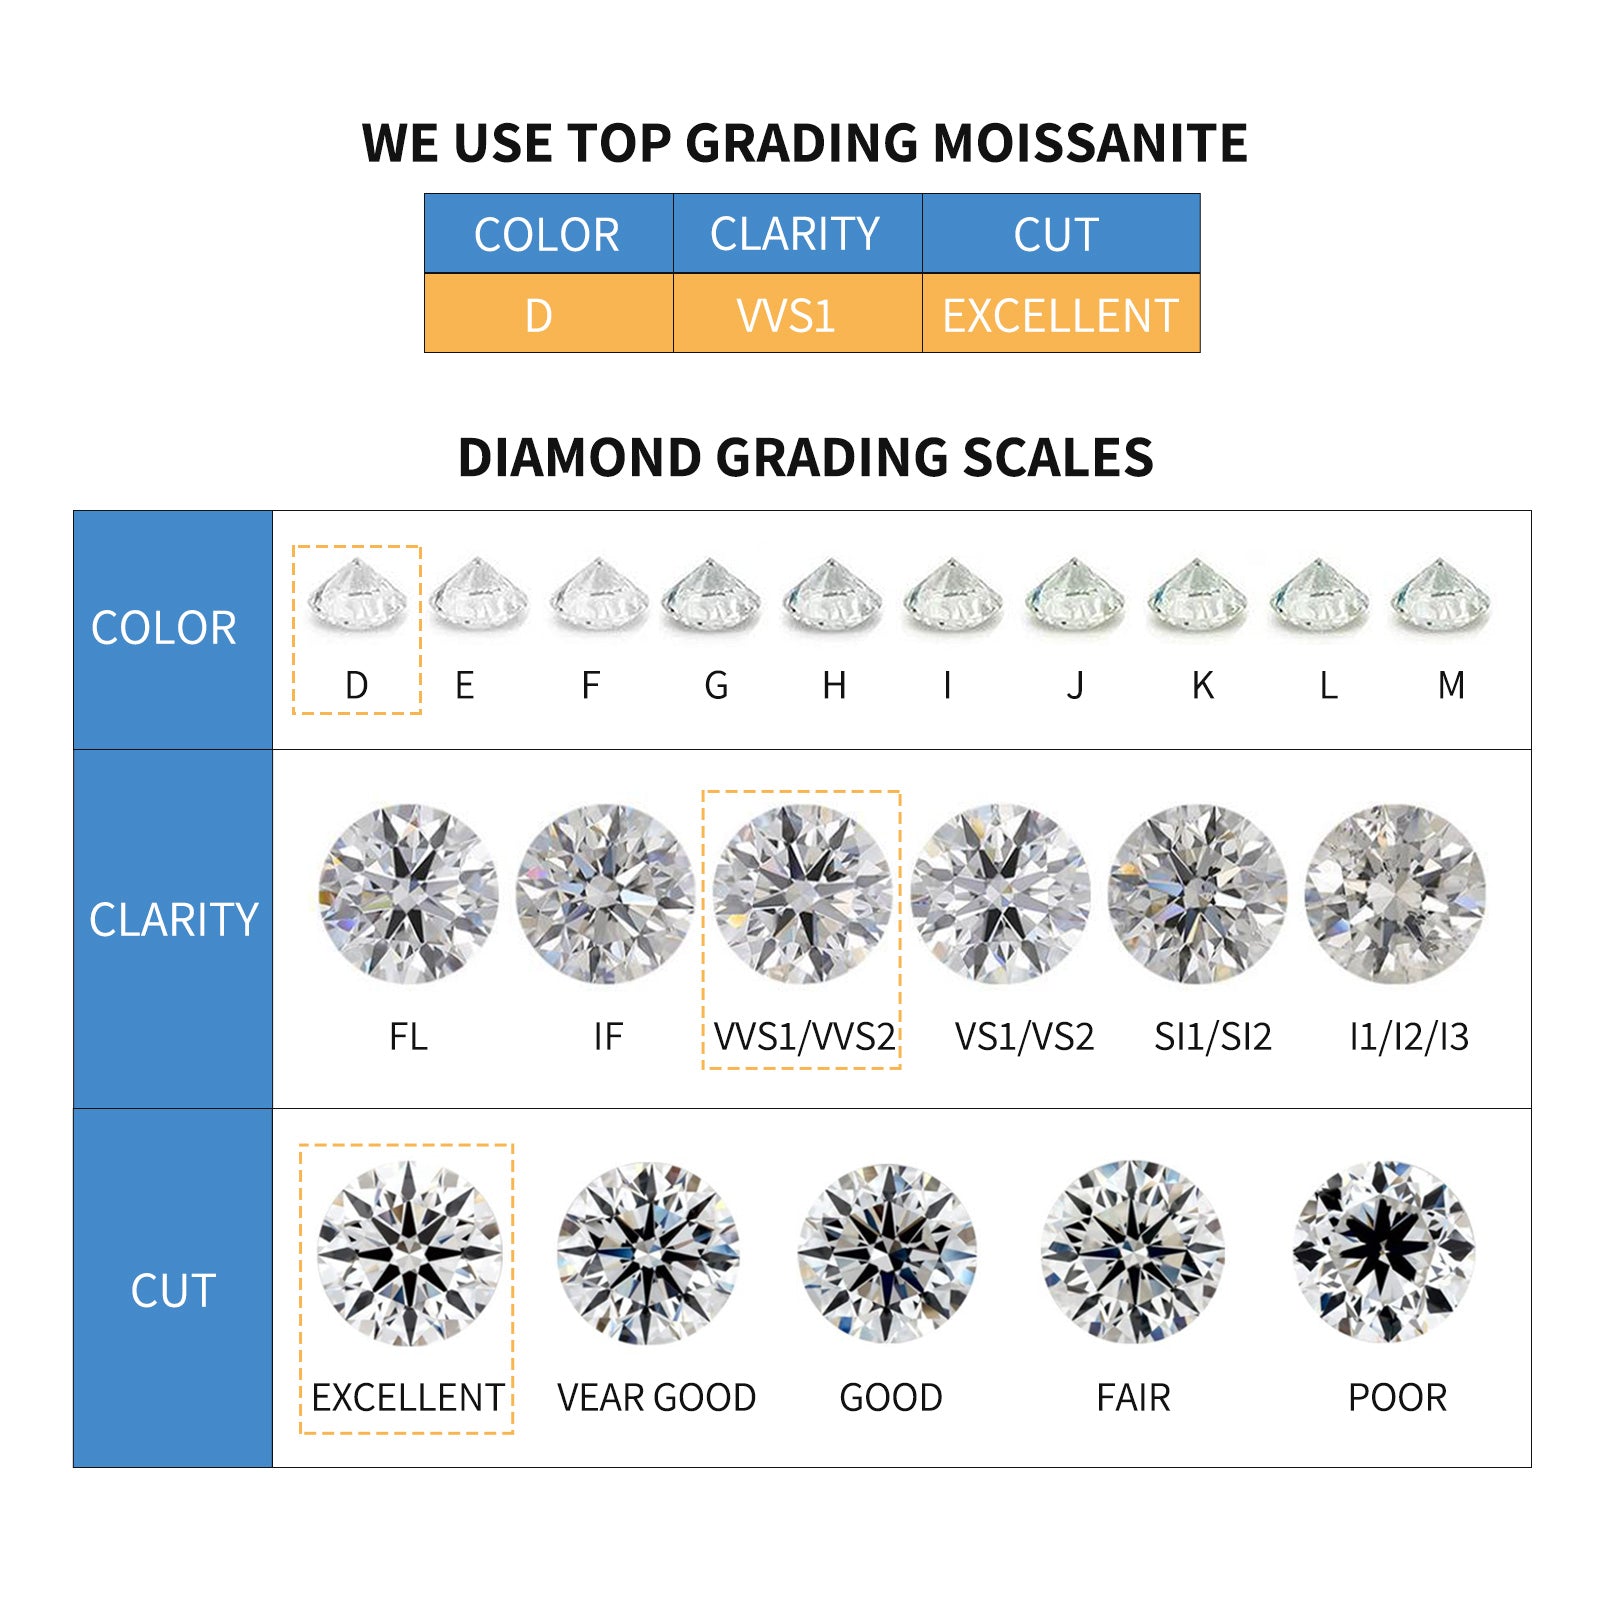 PEETTY classic style moissanite diamond stud earrings 0.5-1ct grading